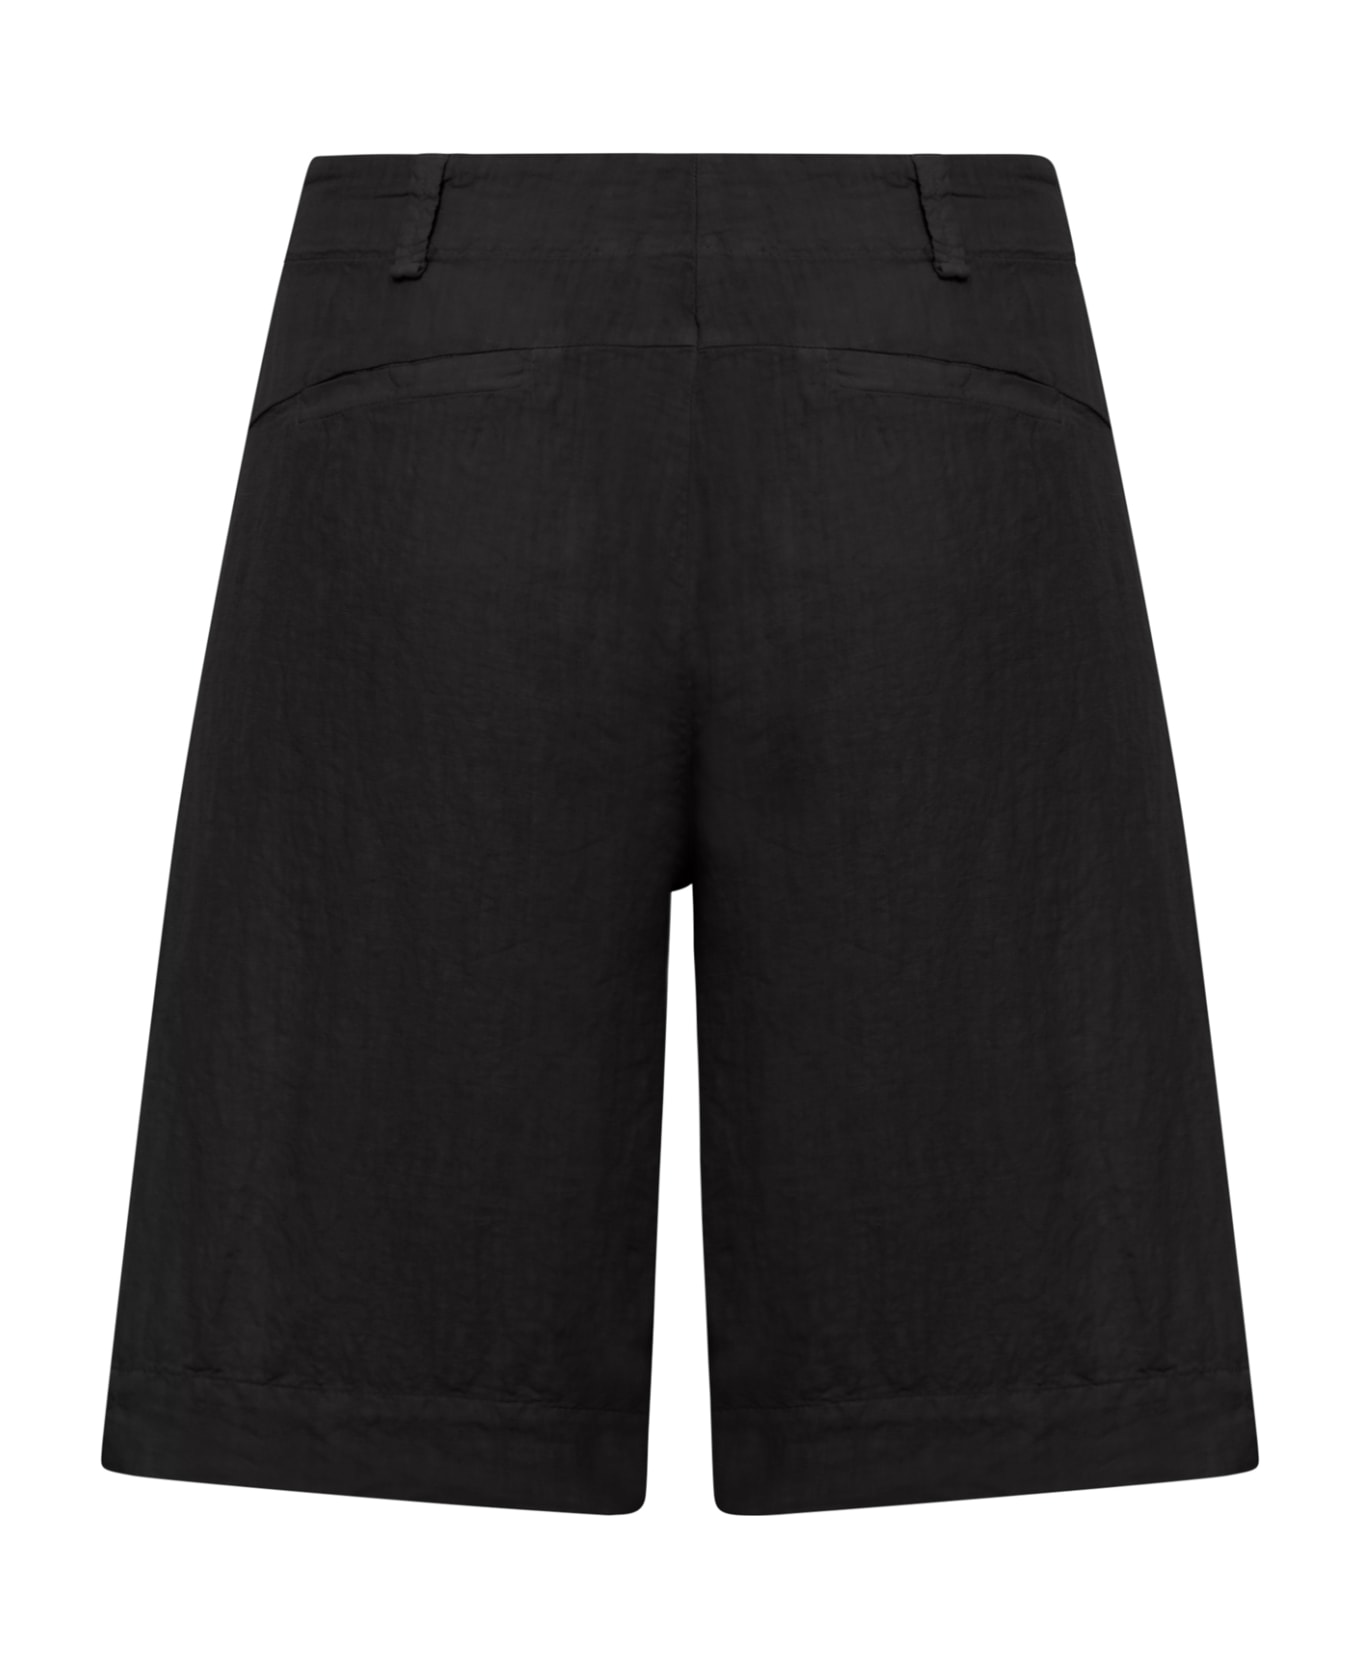 Transit Shorts - Black ショートパンツ